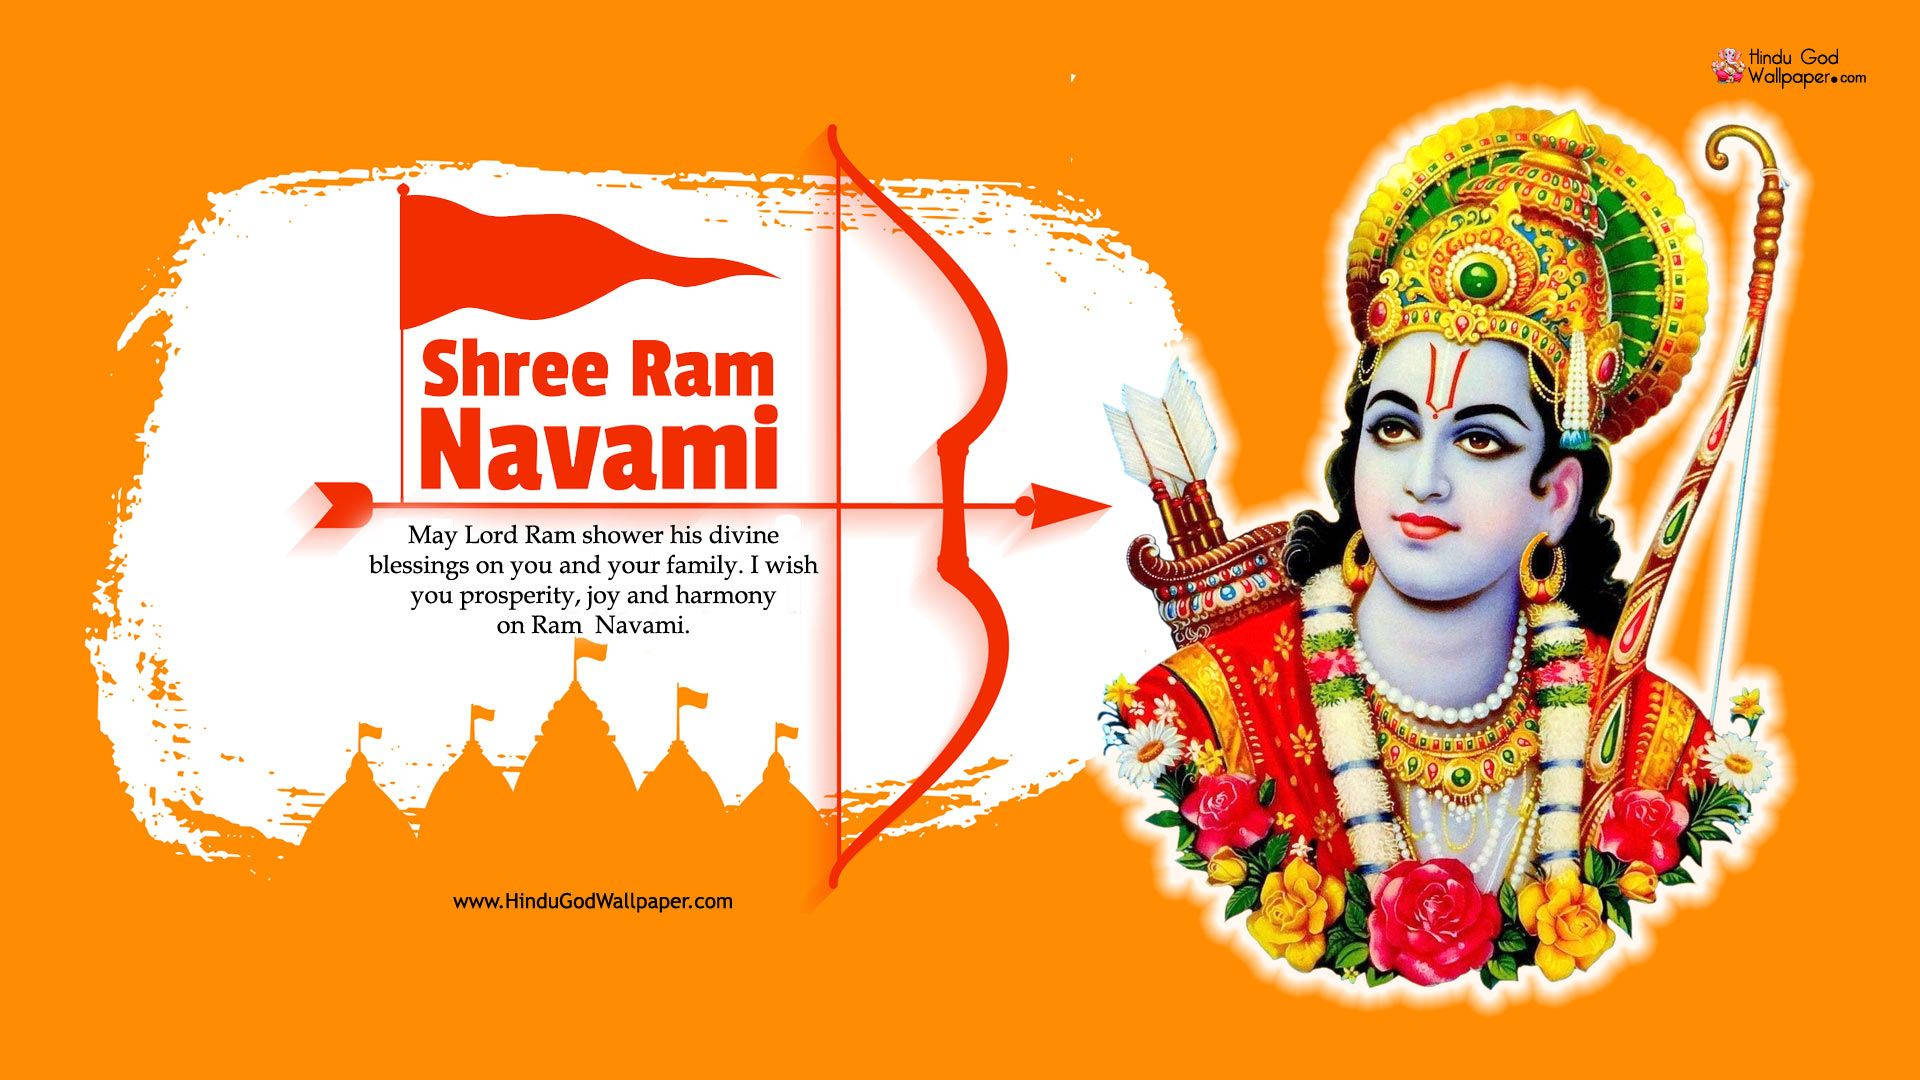 Shreeram Ji Navami Orange Poster: Shree Ram Ji Navami Orange Affisch Wallpaper